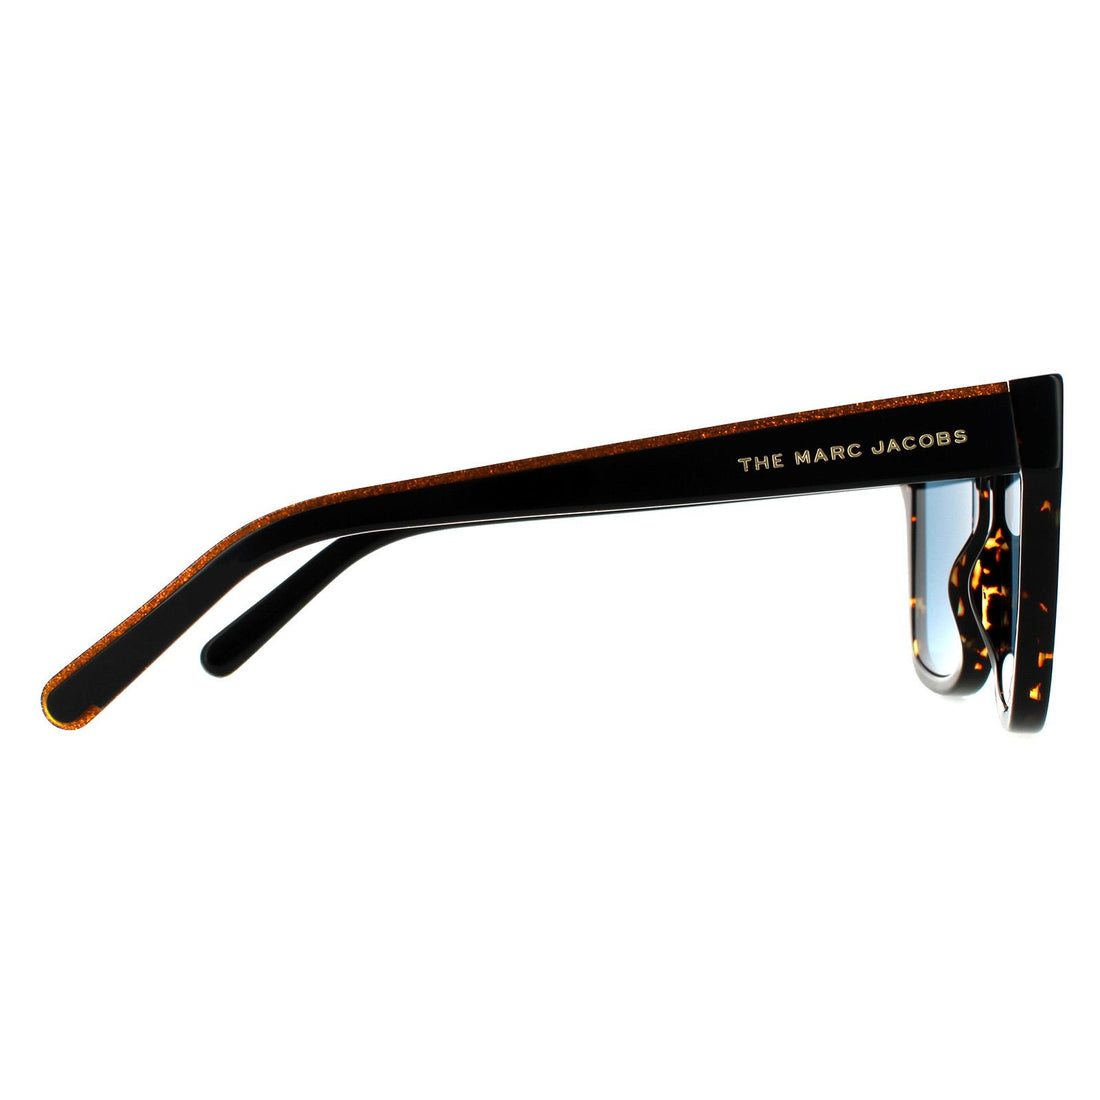 Marc Jacobs Sunglasses MARC 458/S 581 KU Havana Black Blue Avio